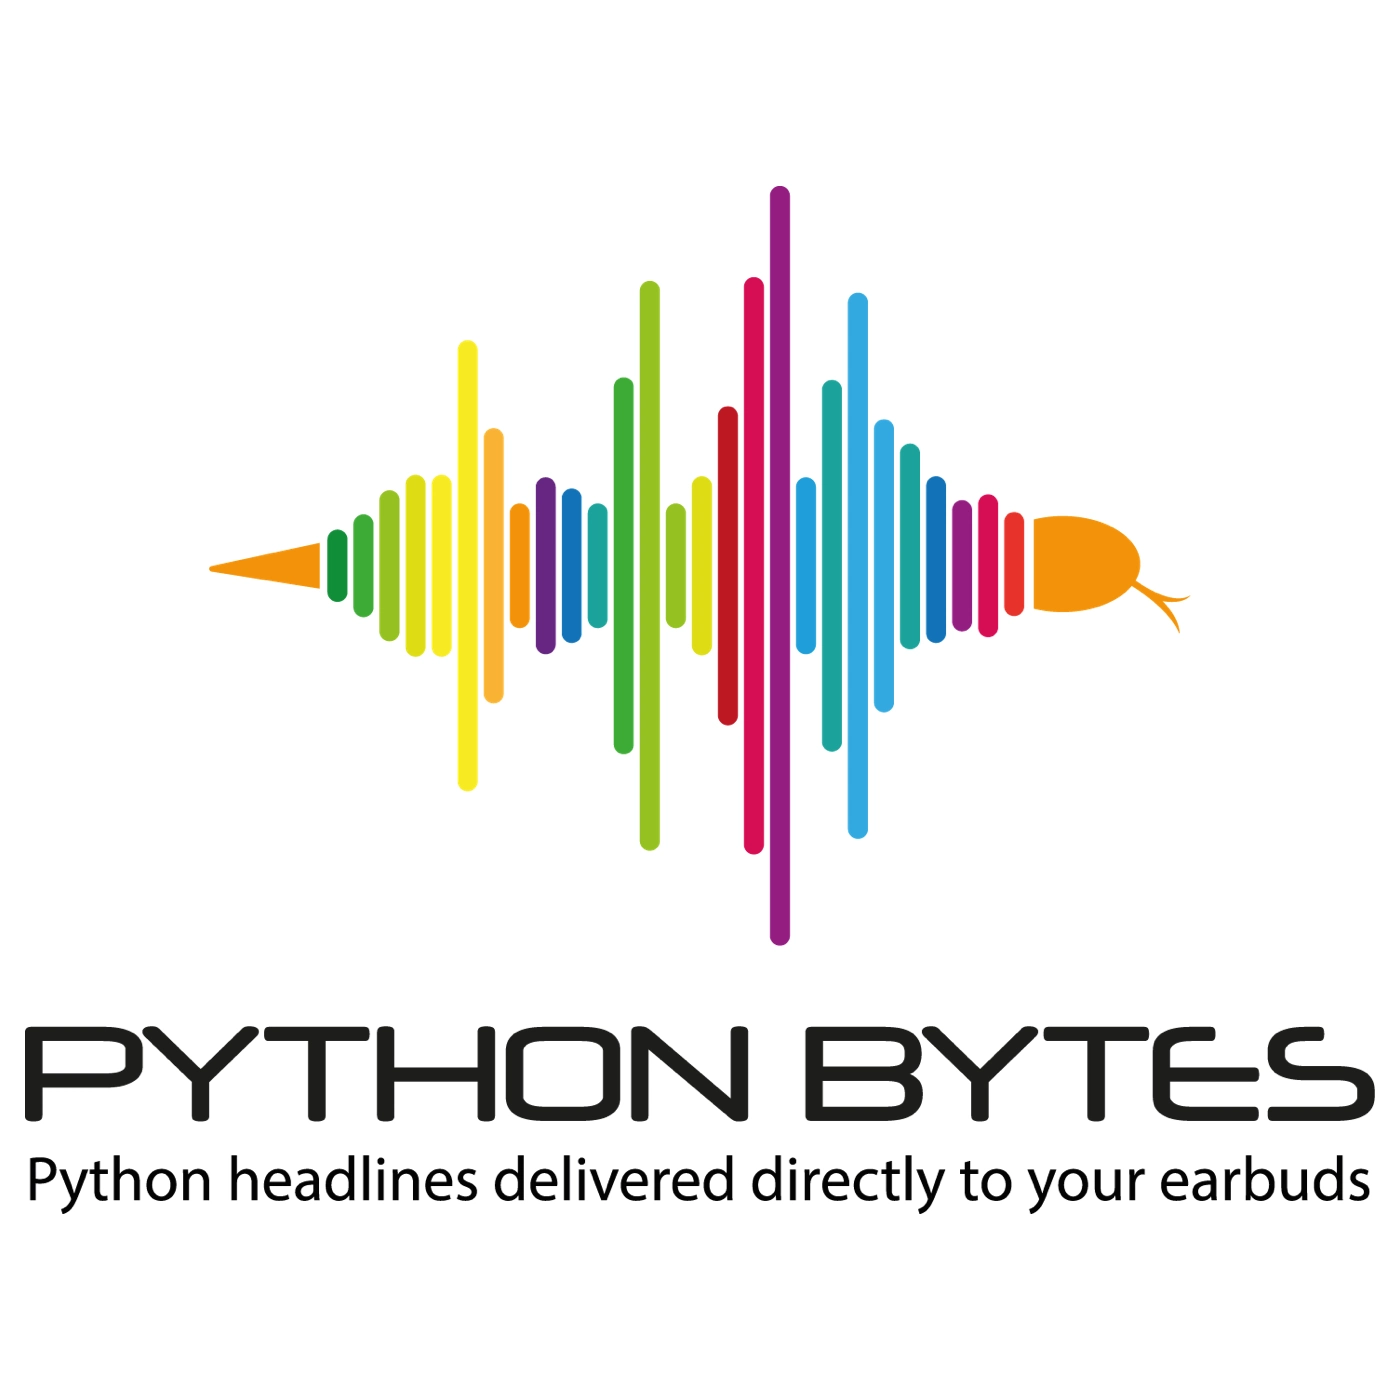 Lyssna på Python Bytes i appen